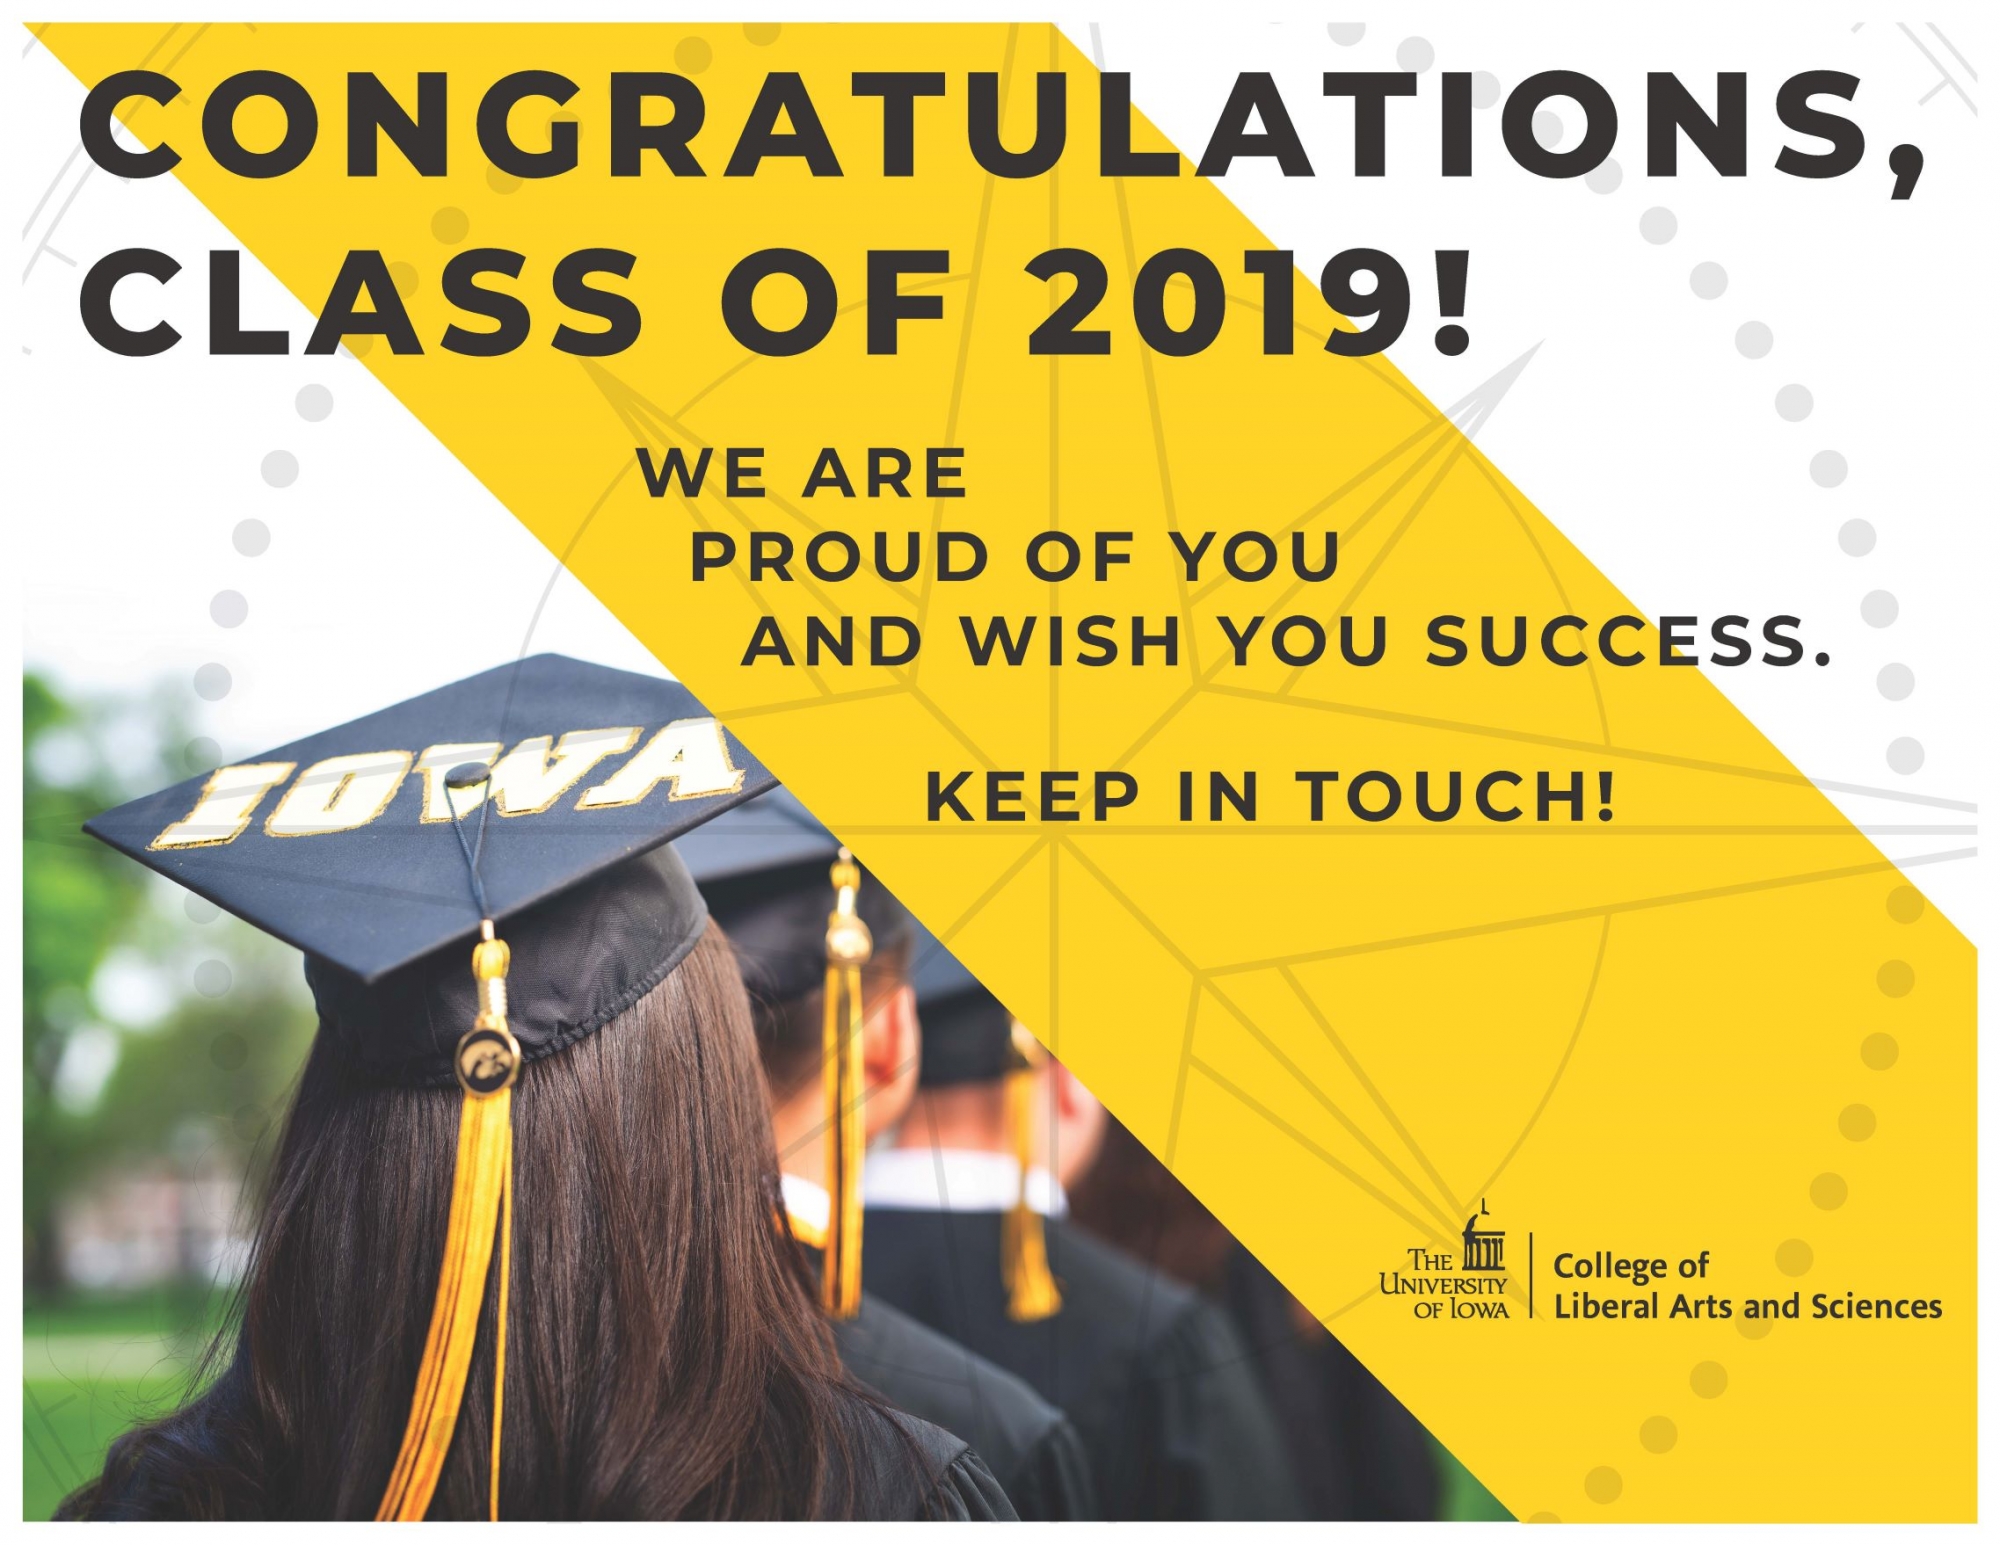 Congratulations, Class of 2019!